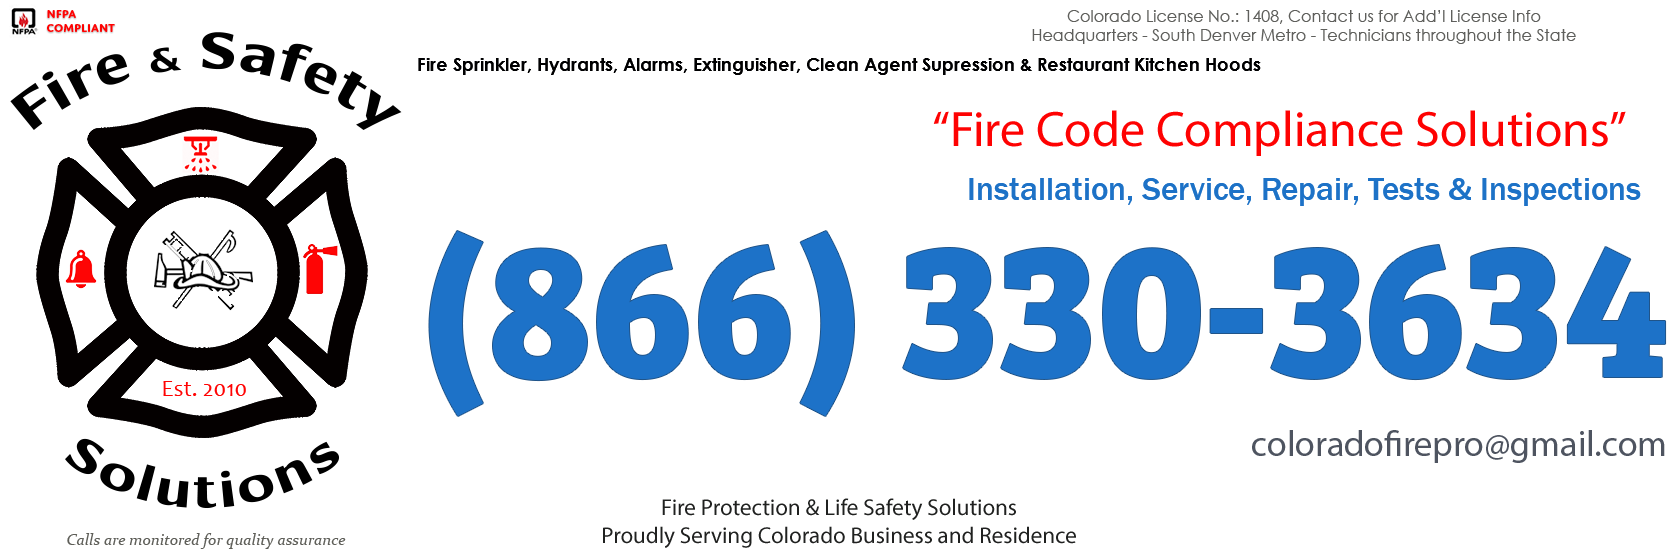 Fort Collins, Colorado Fire Sprinkler Service Company